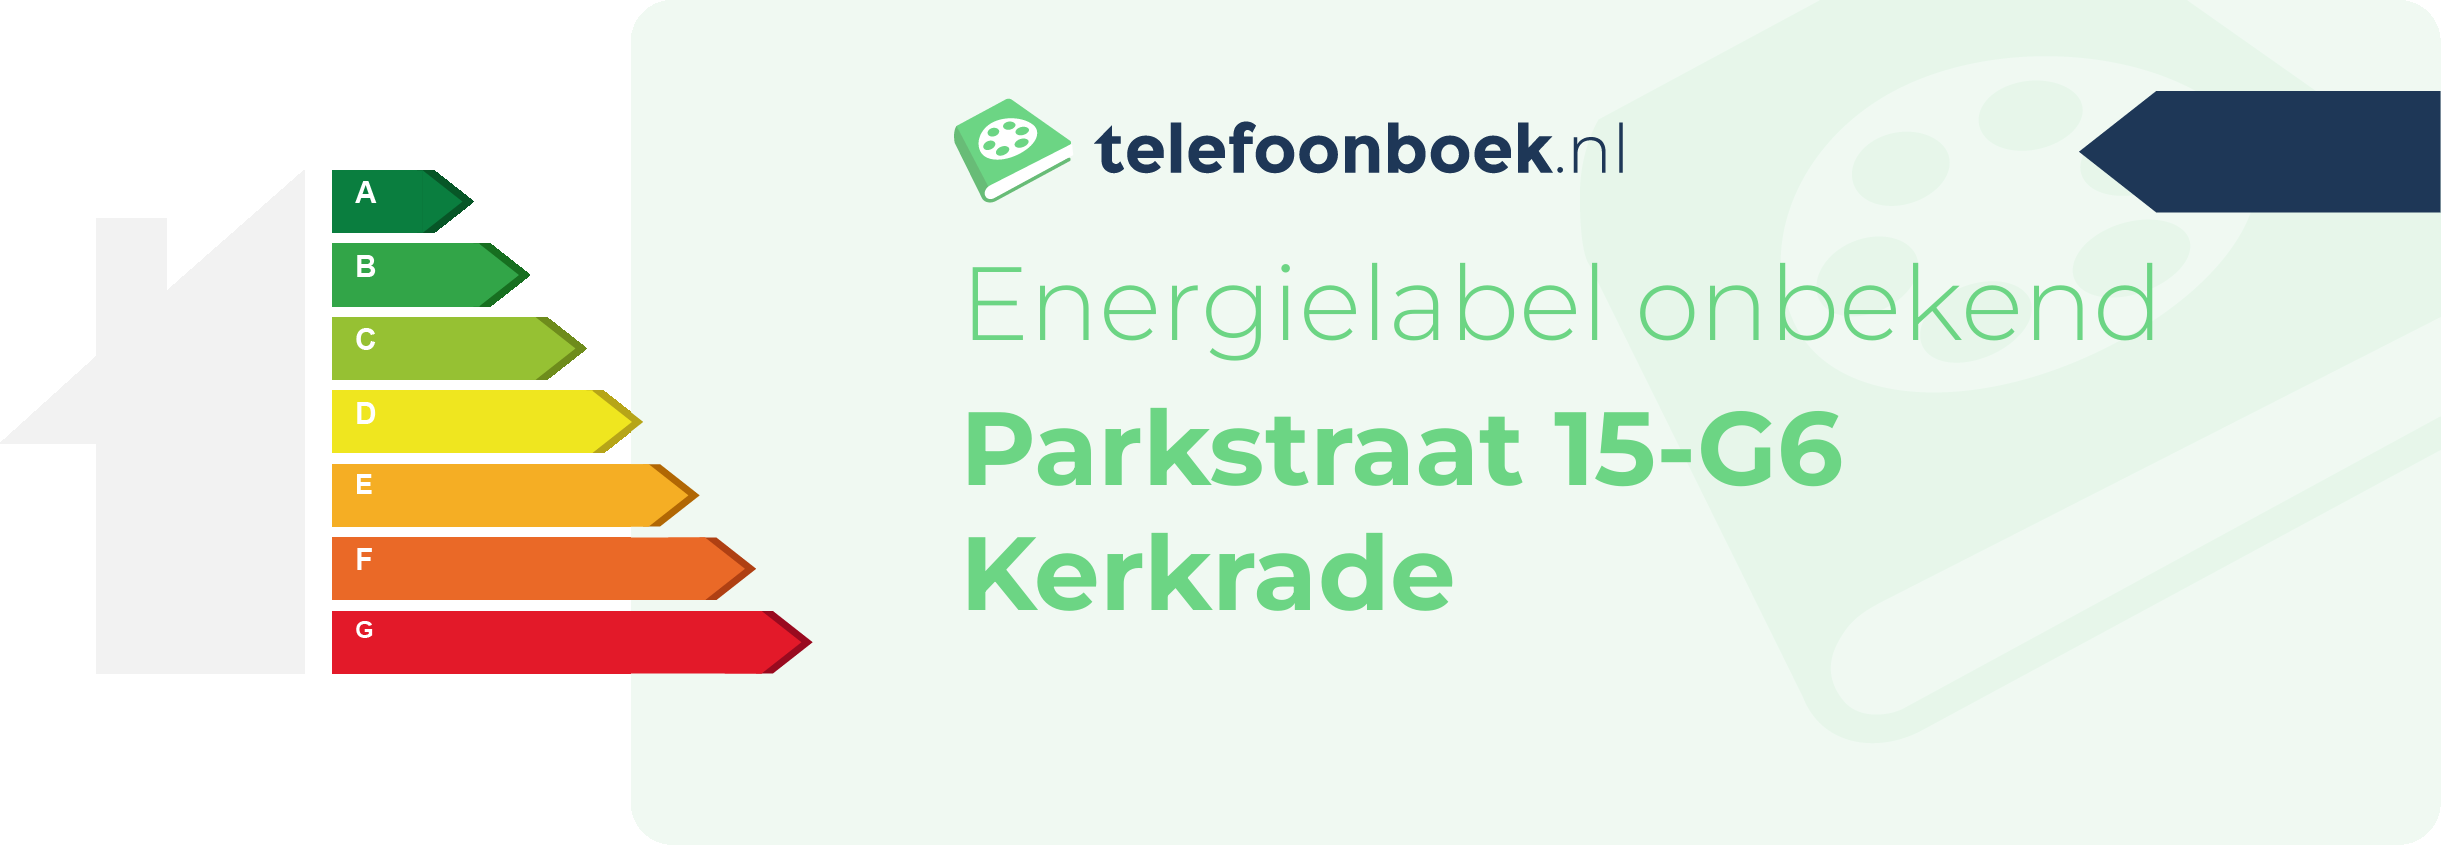 Energielabel Parkstraat 15-G6 Kerkrade